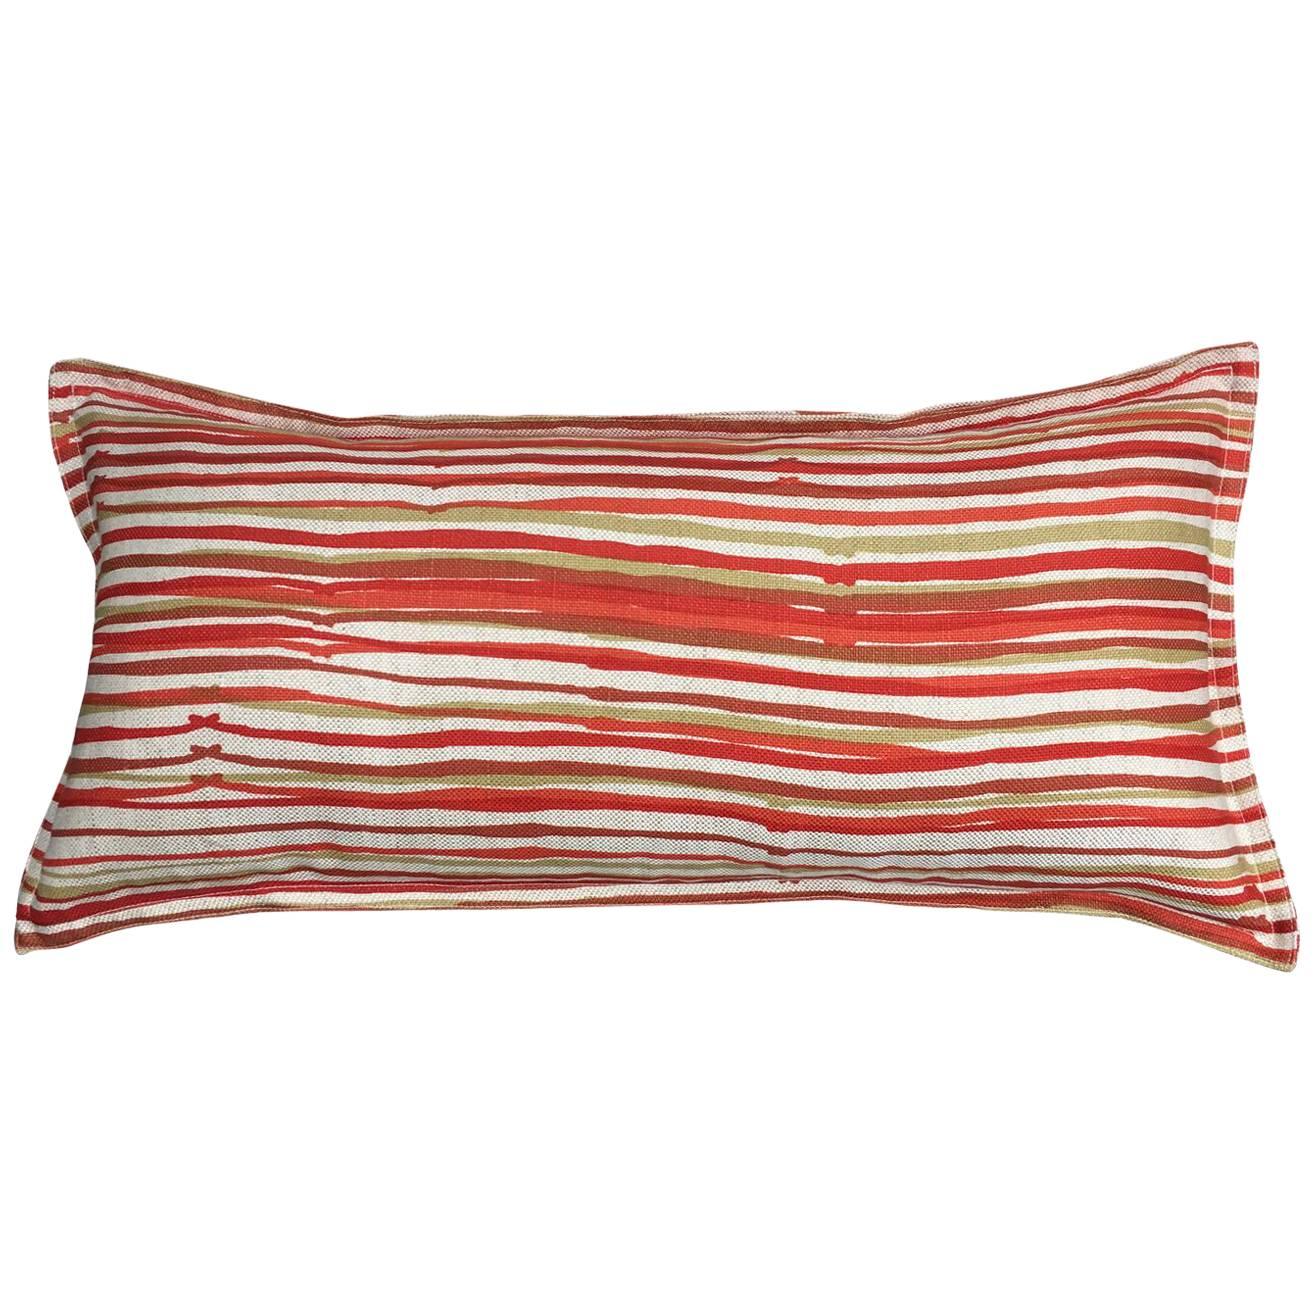 Cayenne Stripe on Wheat Cotton Linen Pillow For Sale